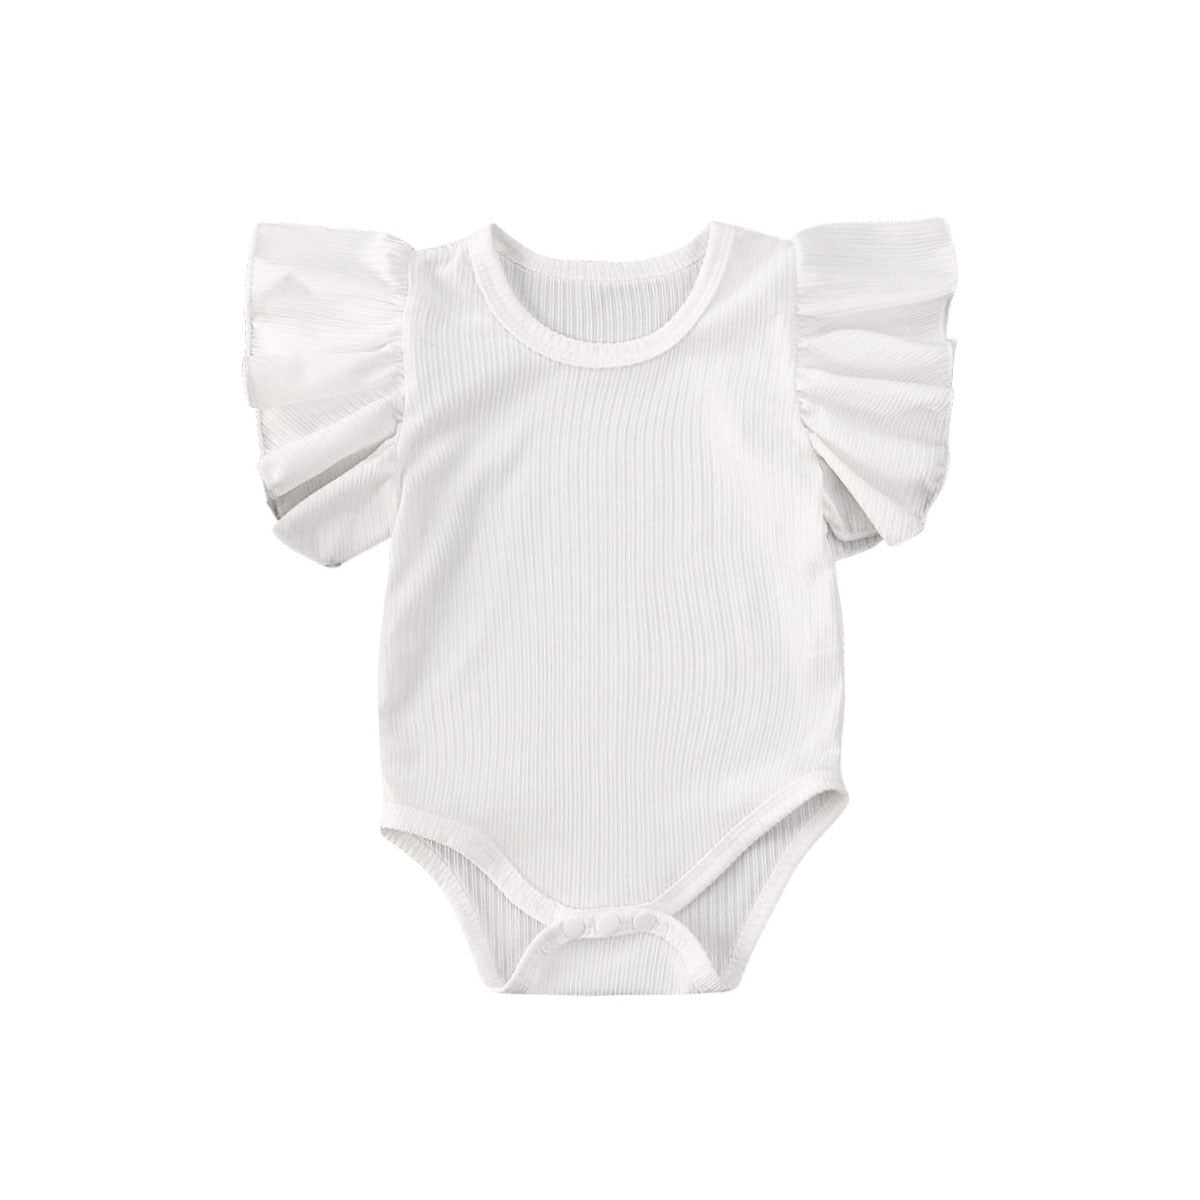 Infant Ruffle Bodysuit